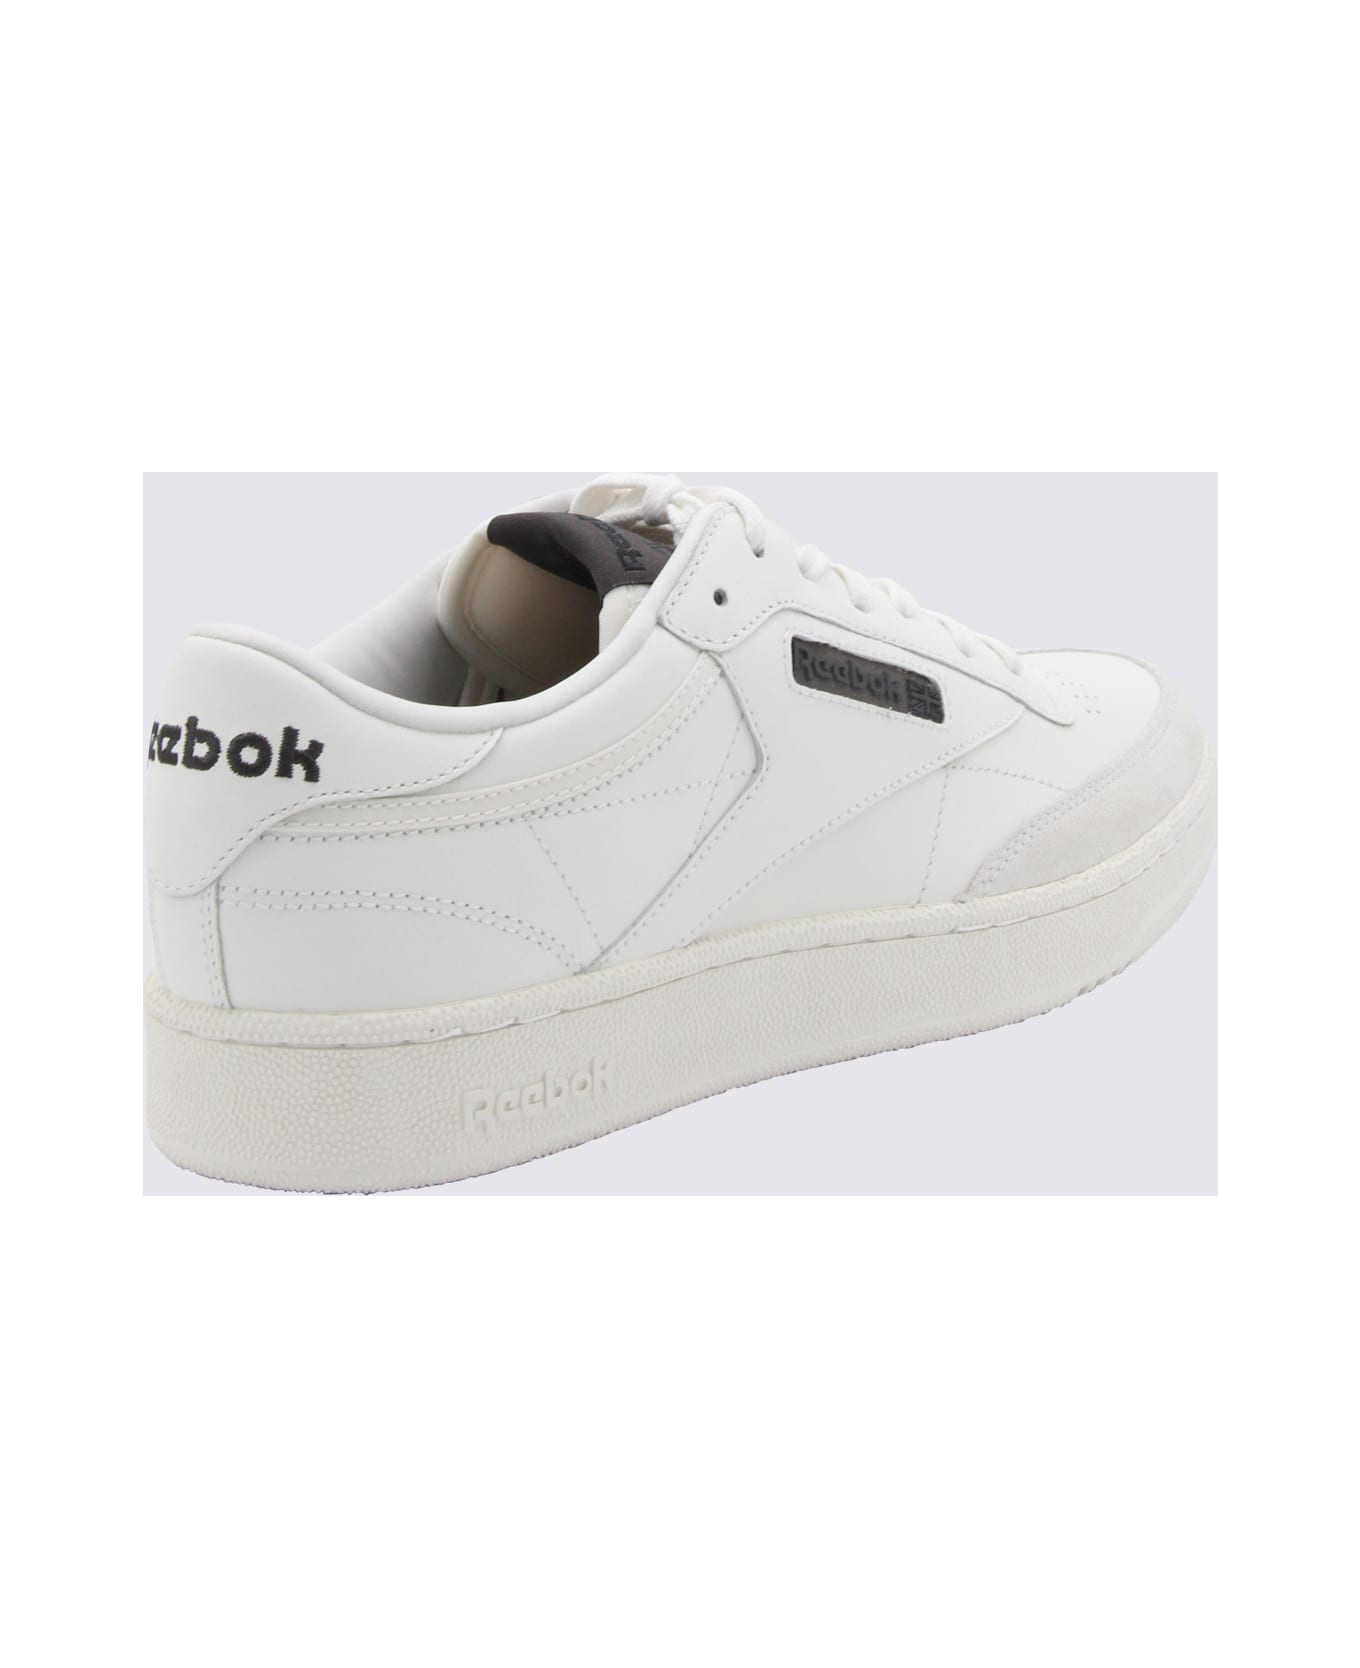 Reebok White Leather Sneakers - White スニーカー